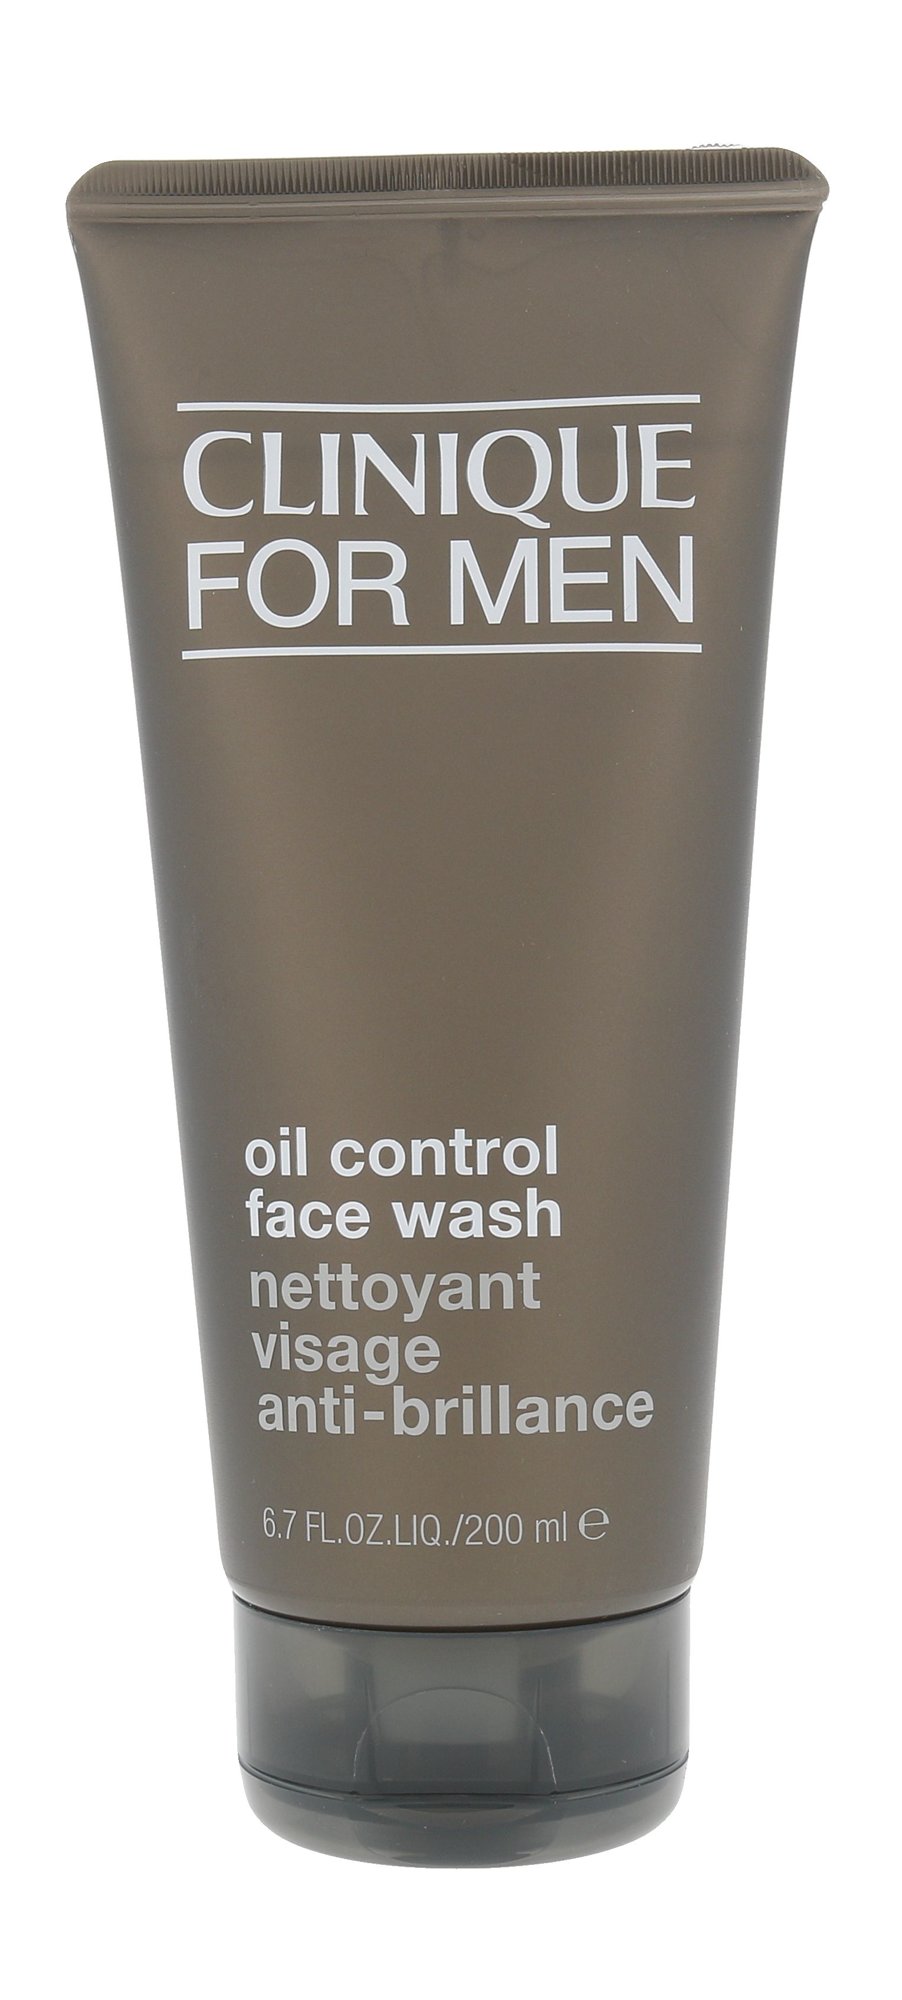 Clinique For Men Oil Control Face Wash veido gelis